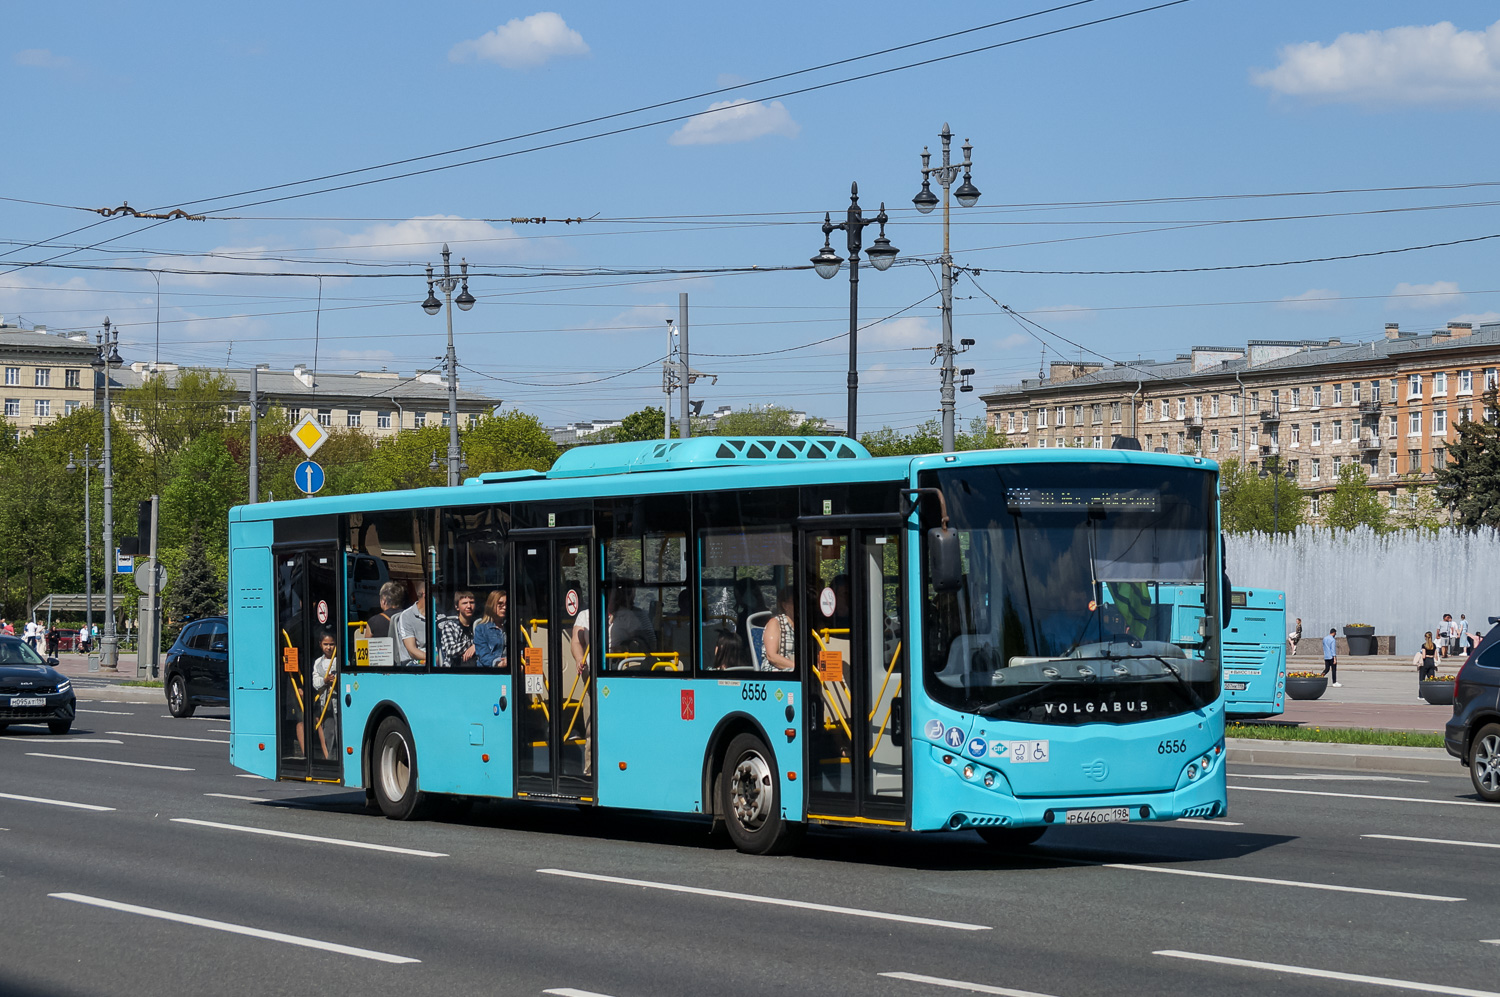 Saint Petersburg, Volgabus-5270.G2 (LNG) # 6556